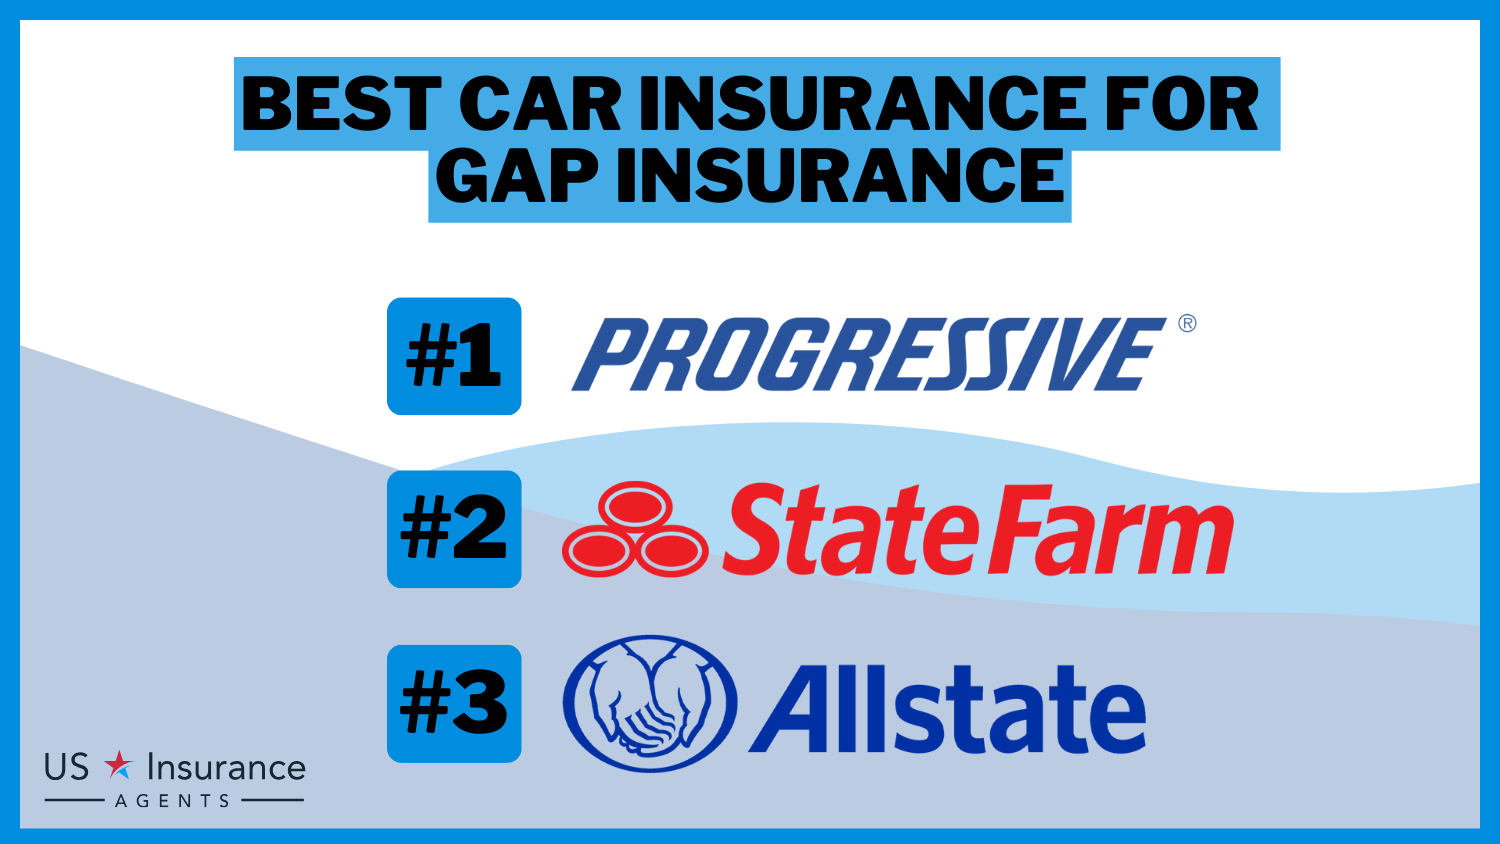 3 Best Car Insurance For GAP Insurance: Progressive, State Farm, and Allstate.